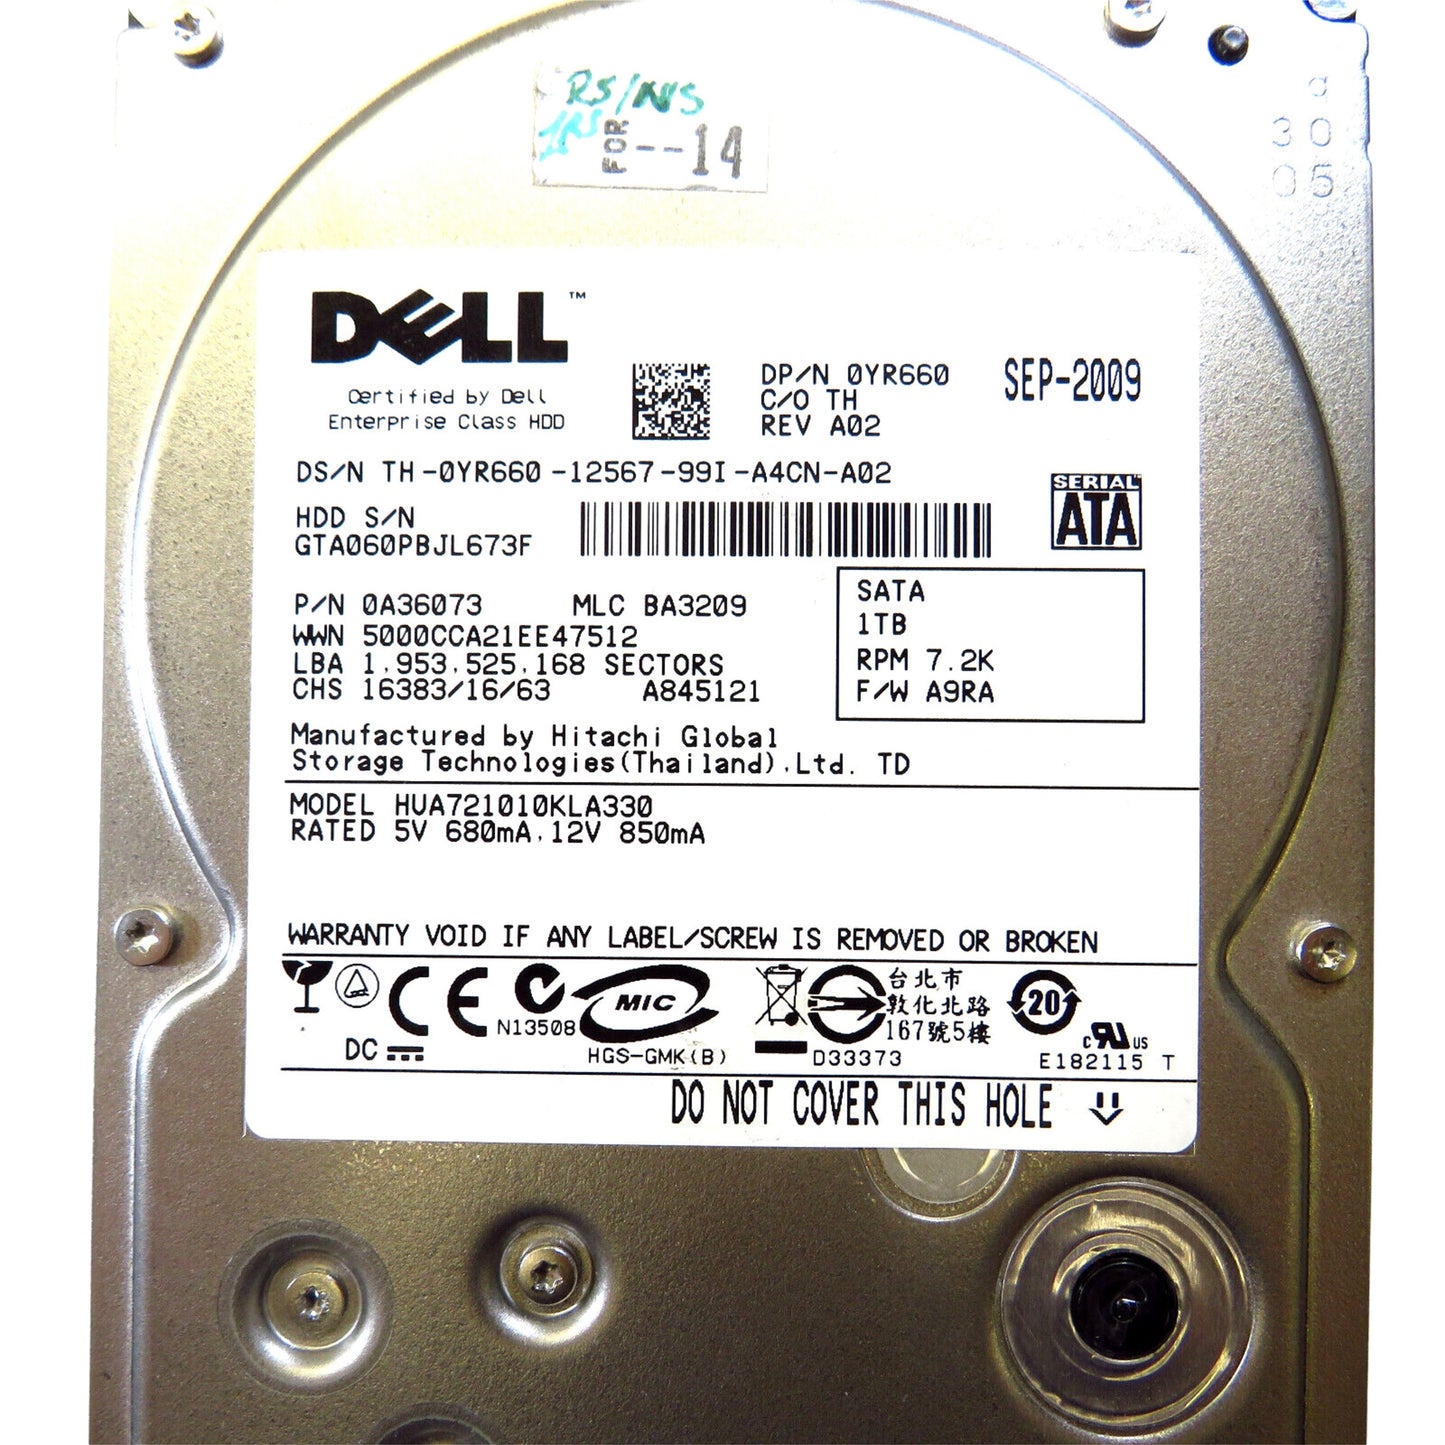 Dell YR660 3.5" 1TB 7200RPM SATA II Hard Disk Drive (HDD), Silver (Refurbished)